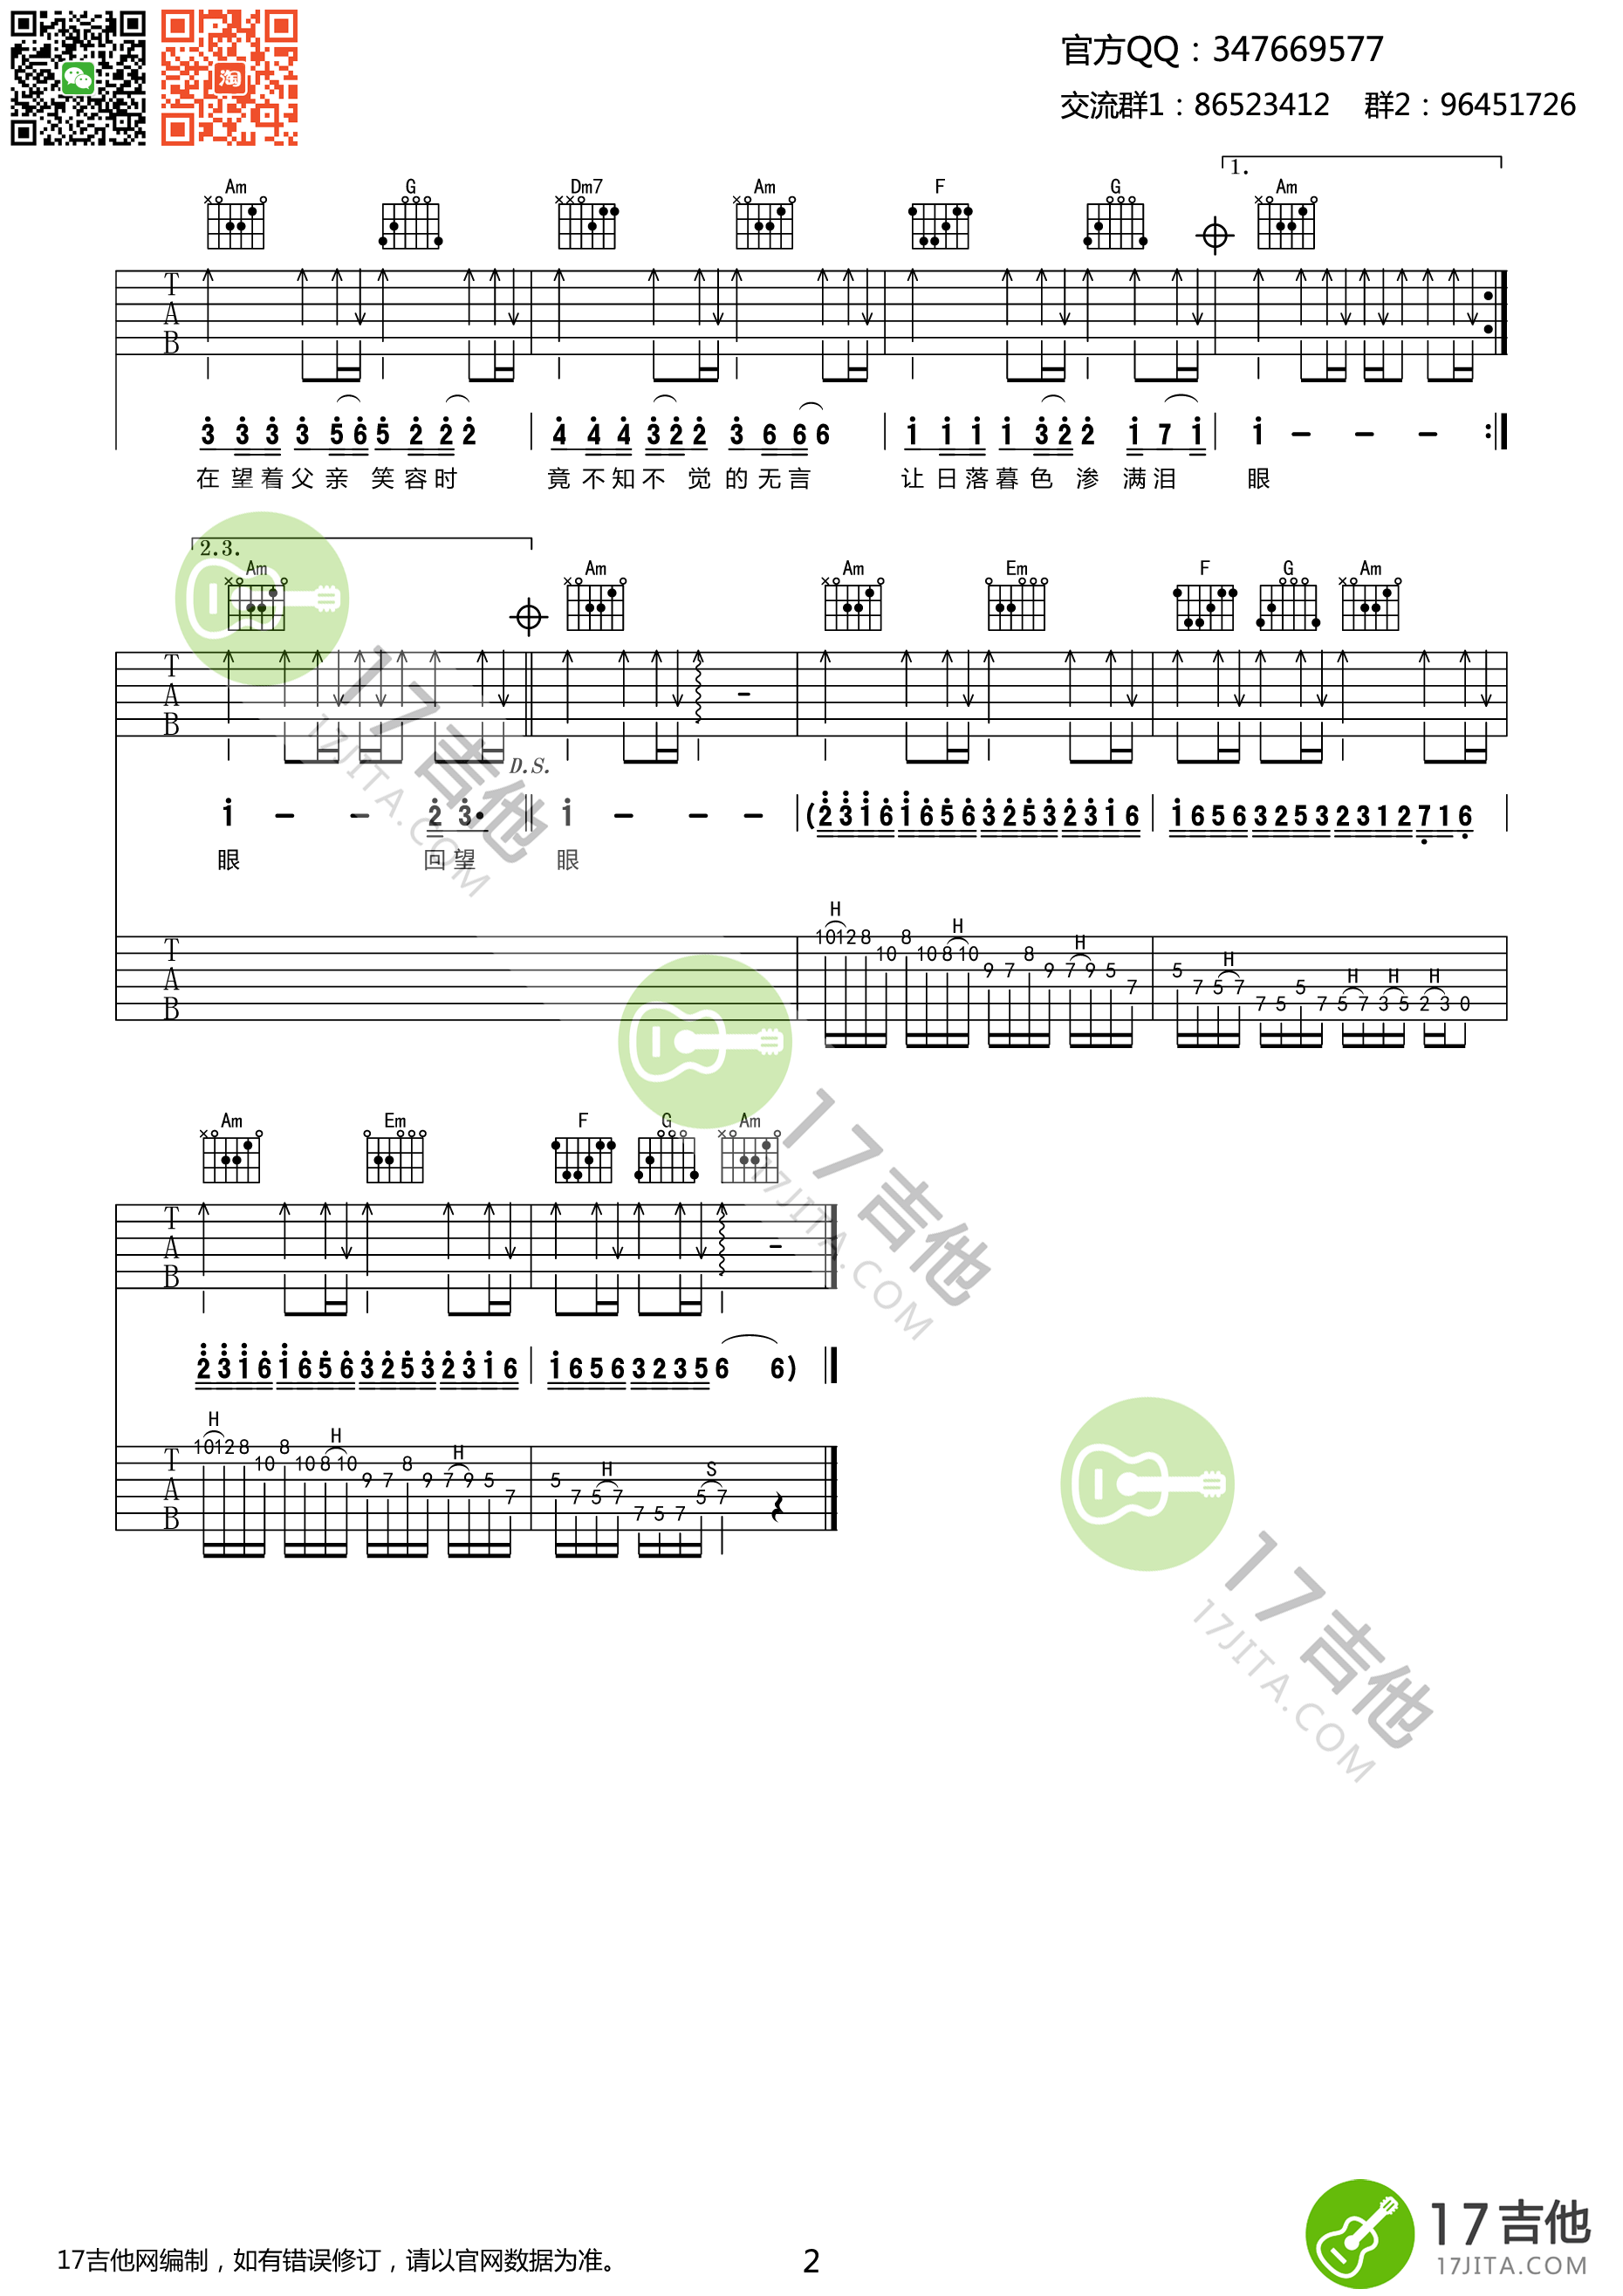 Beyond《大地》吉他谱-Guitar Music Score